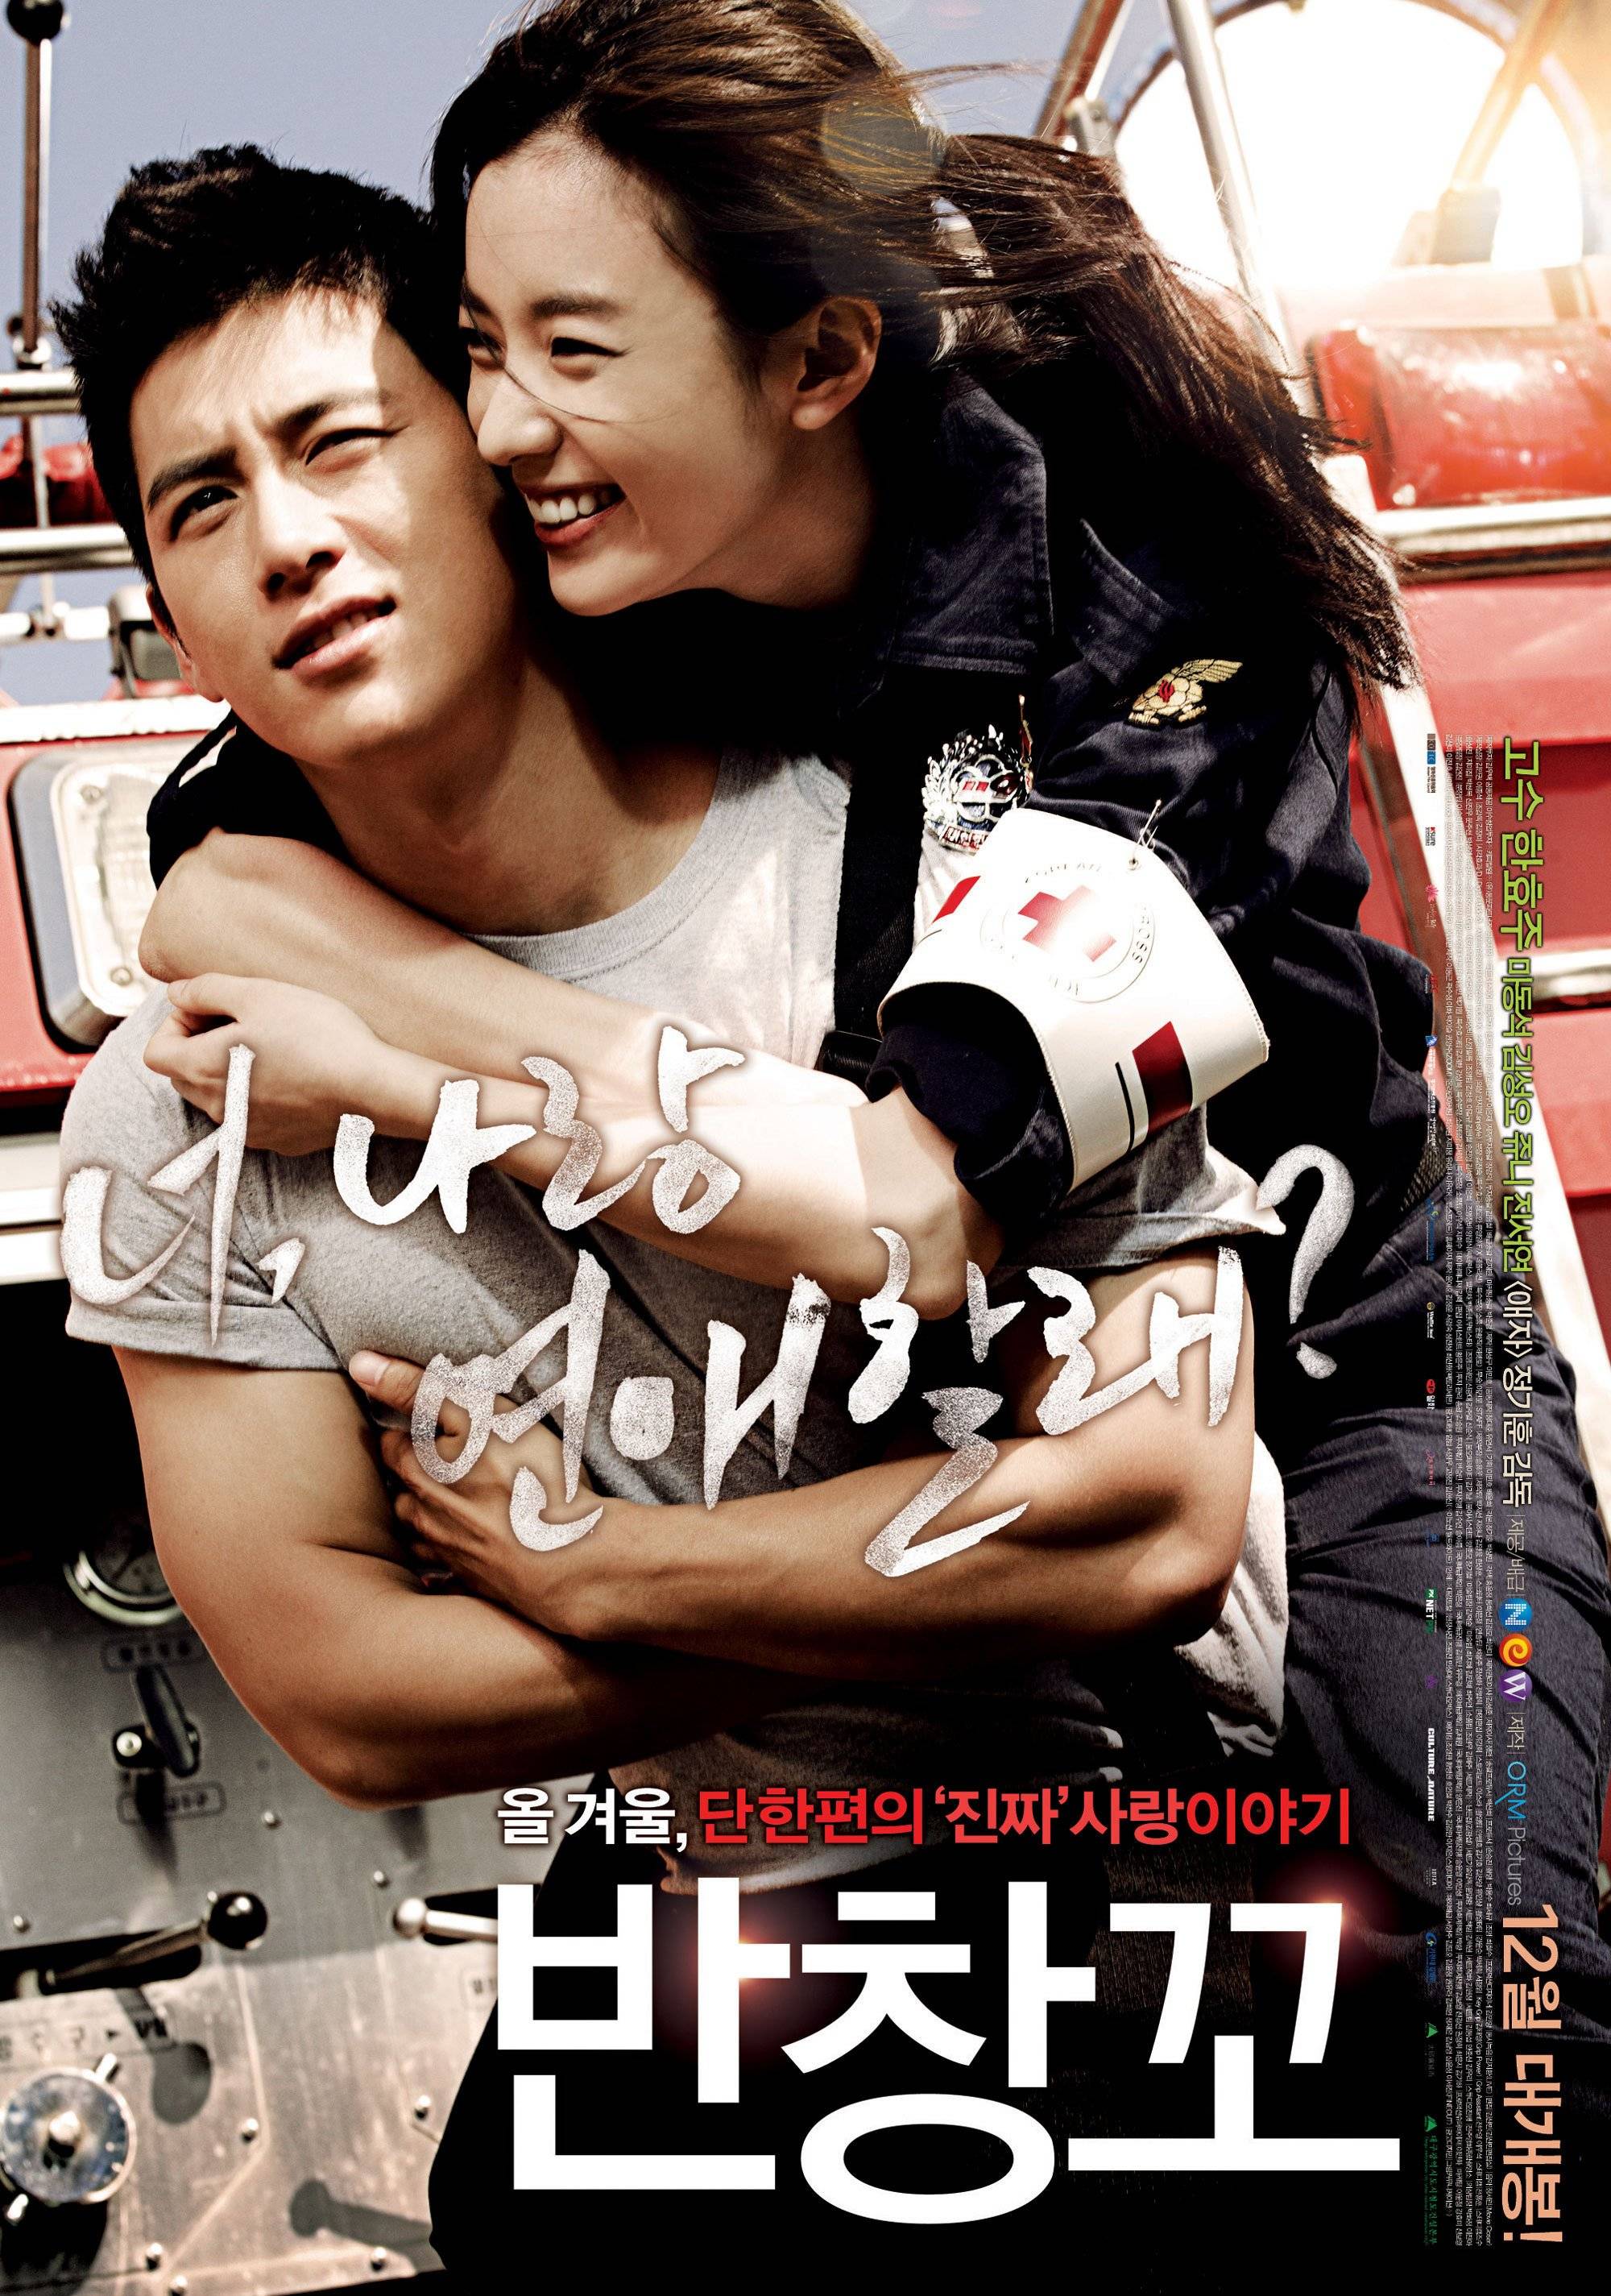 Korean movies opening today 2012/12/19 in Korea @ HanCinema :: The